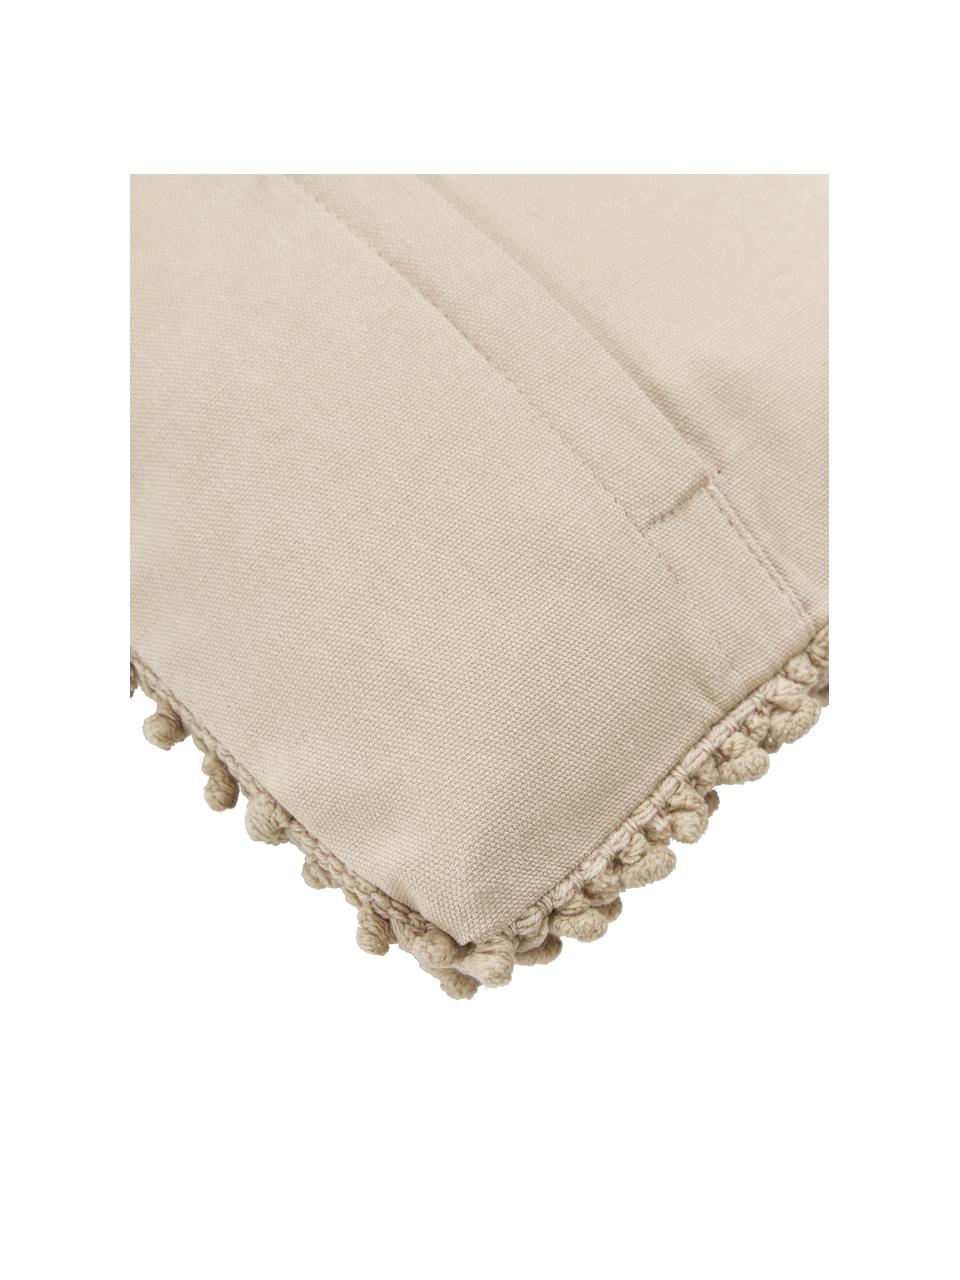 Poszewka na poduszkę Indi, 100% bawełna, Taupe, S 30 x D 50 cm